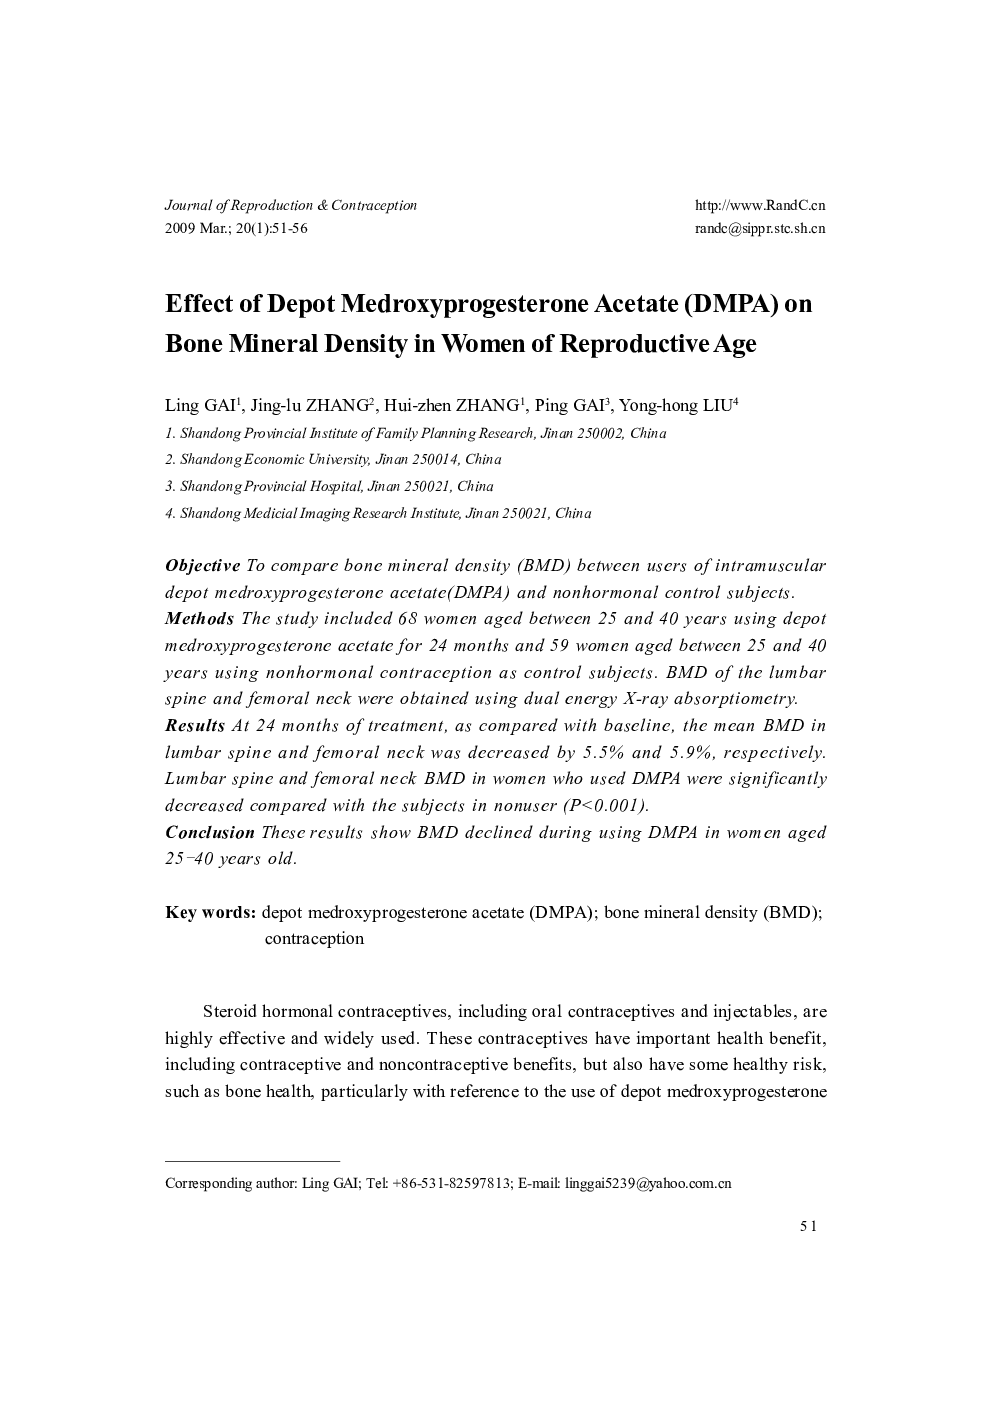 Effect of Depot Medroxyprogesterone Acetate (DMPA) on Bone Mineral Density in Women of Reproductive Age